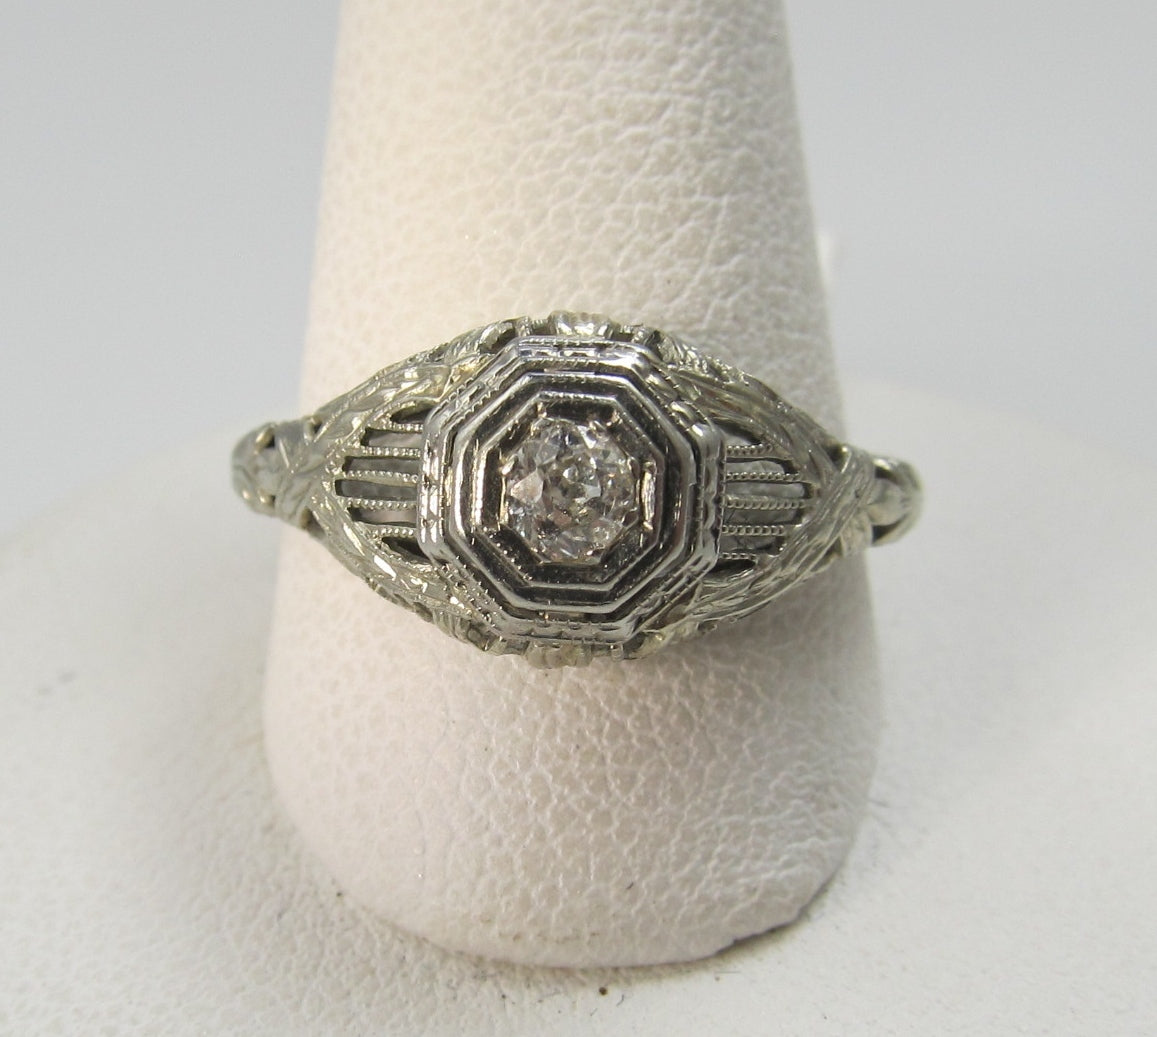 Antique 18k White Gold Filigree Ring With A .20ct Diamond. Circa 1920.